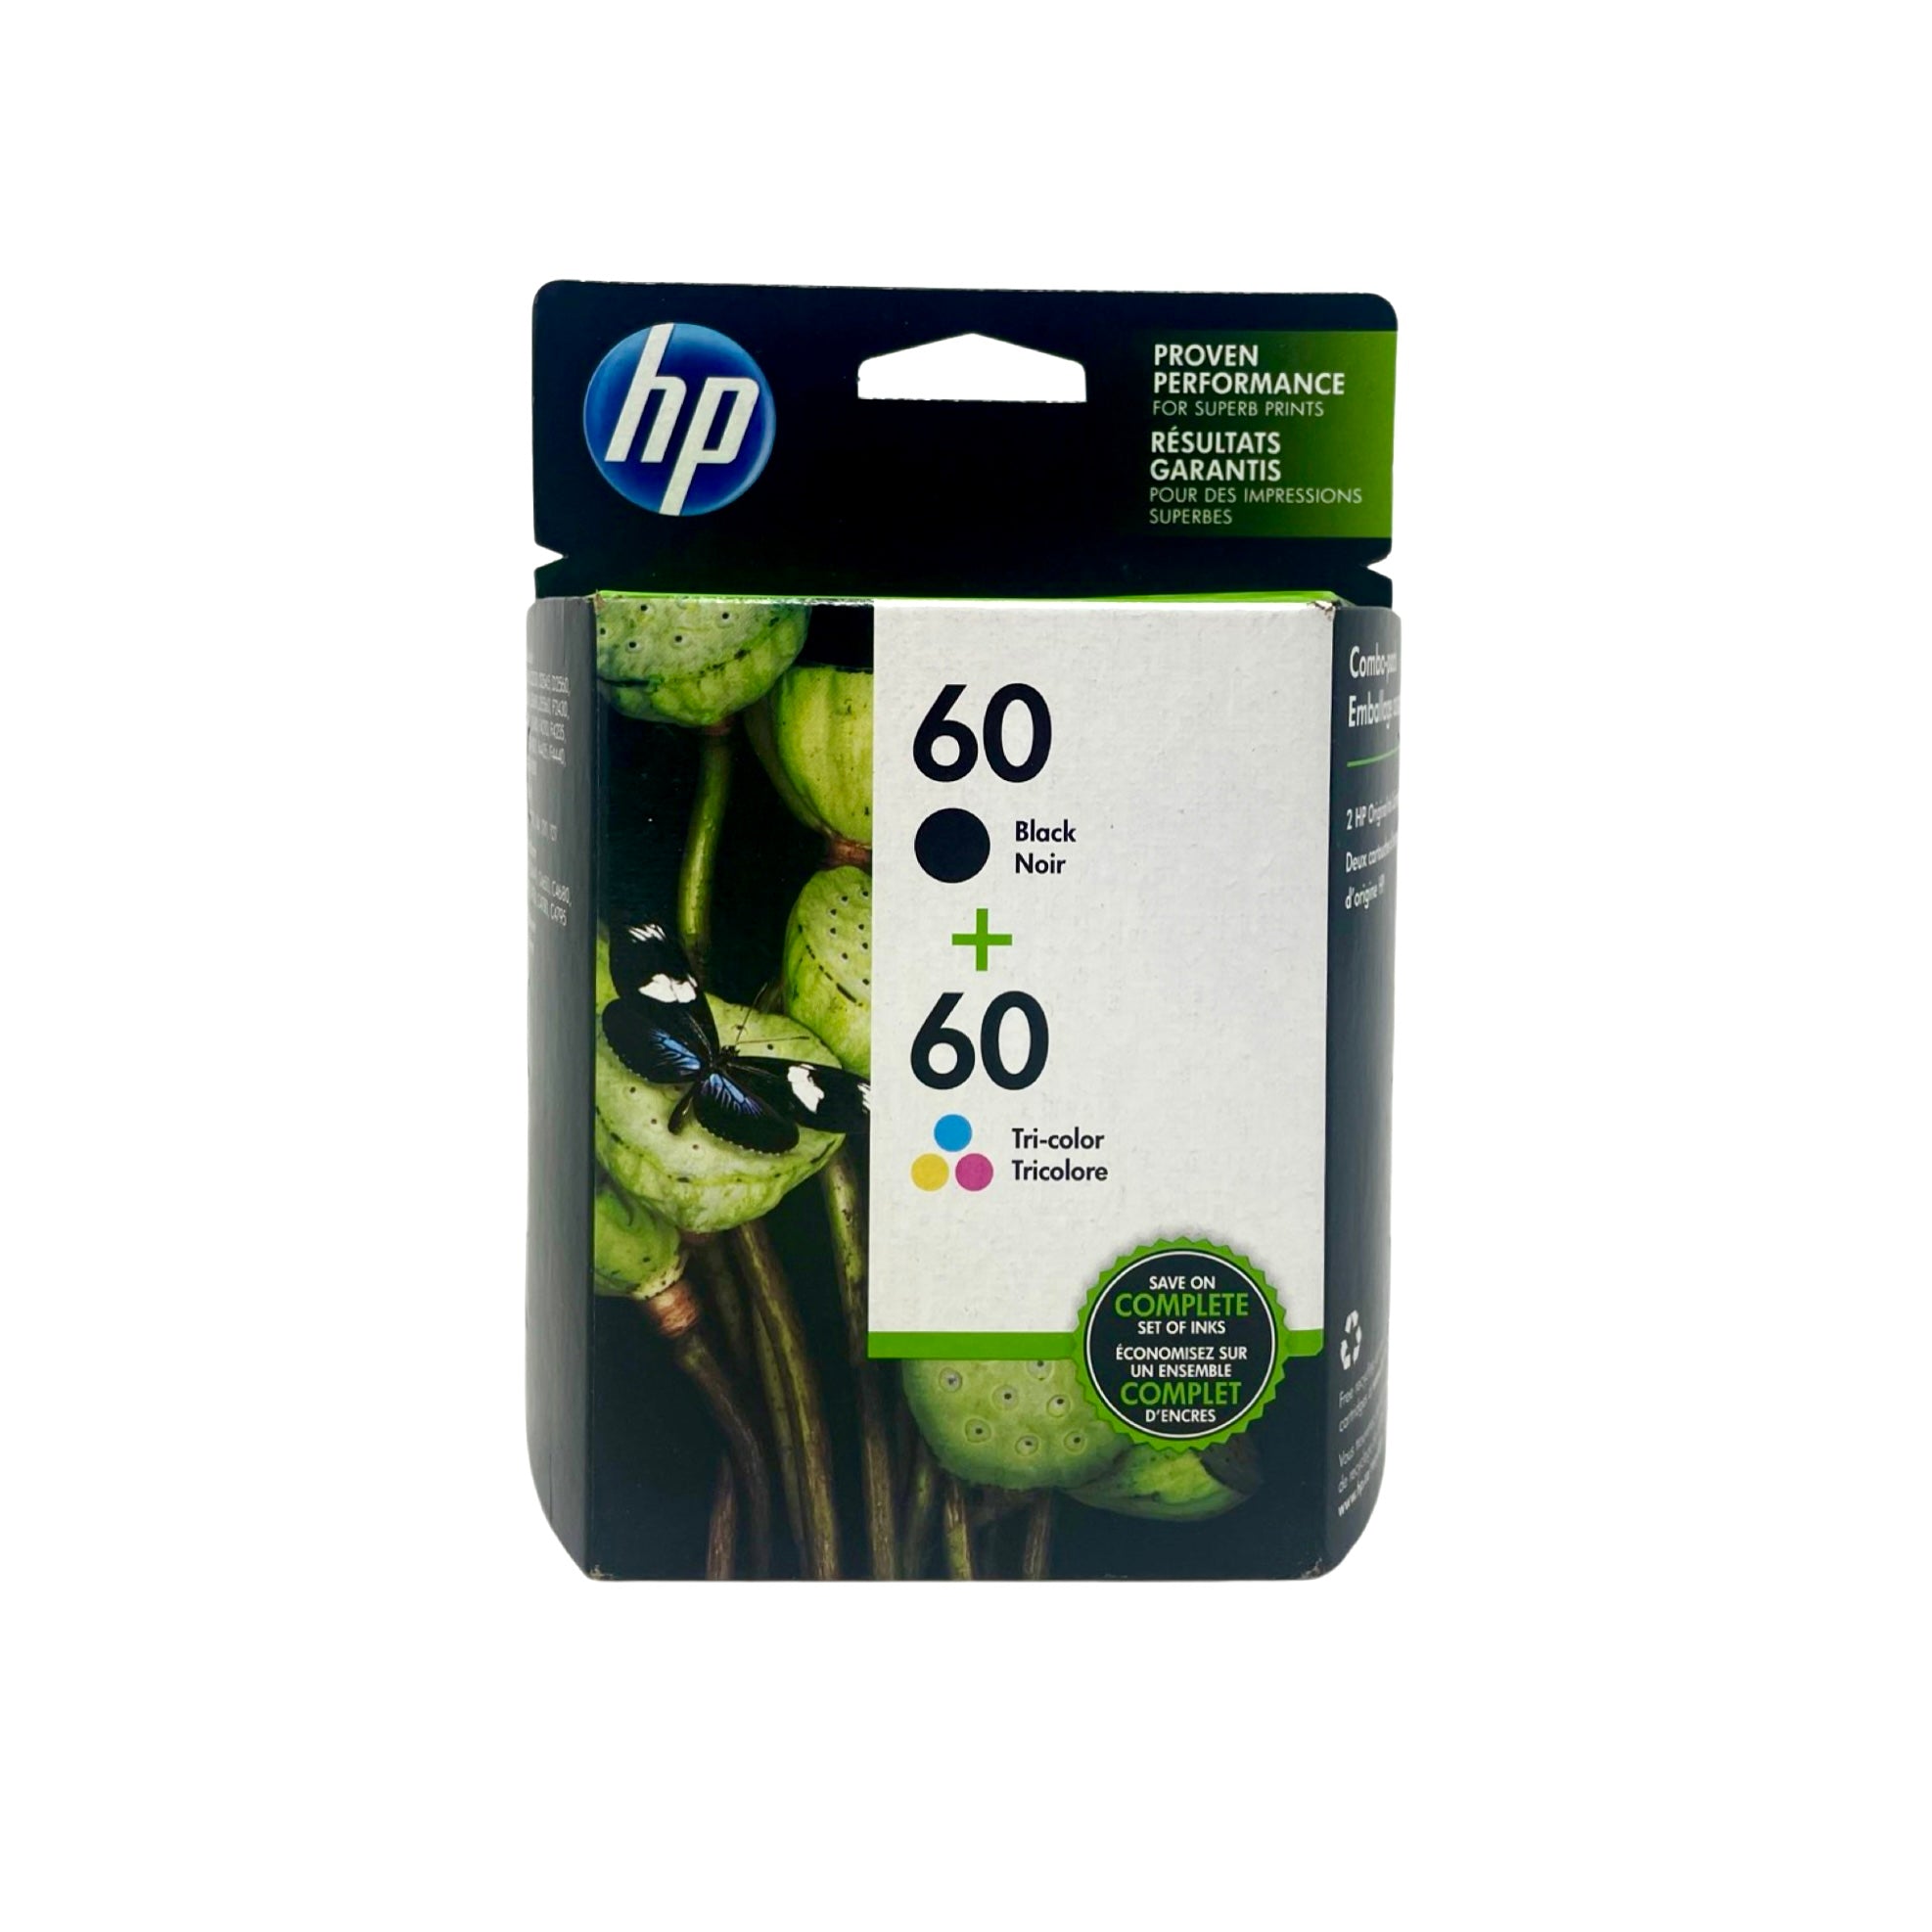 Genuine HP 60 Black and Tri-color Ink Cartridge